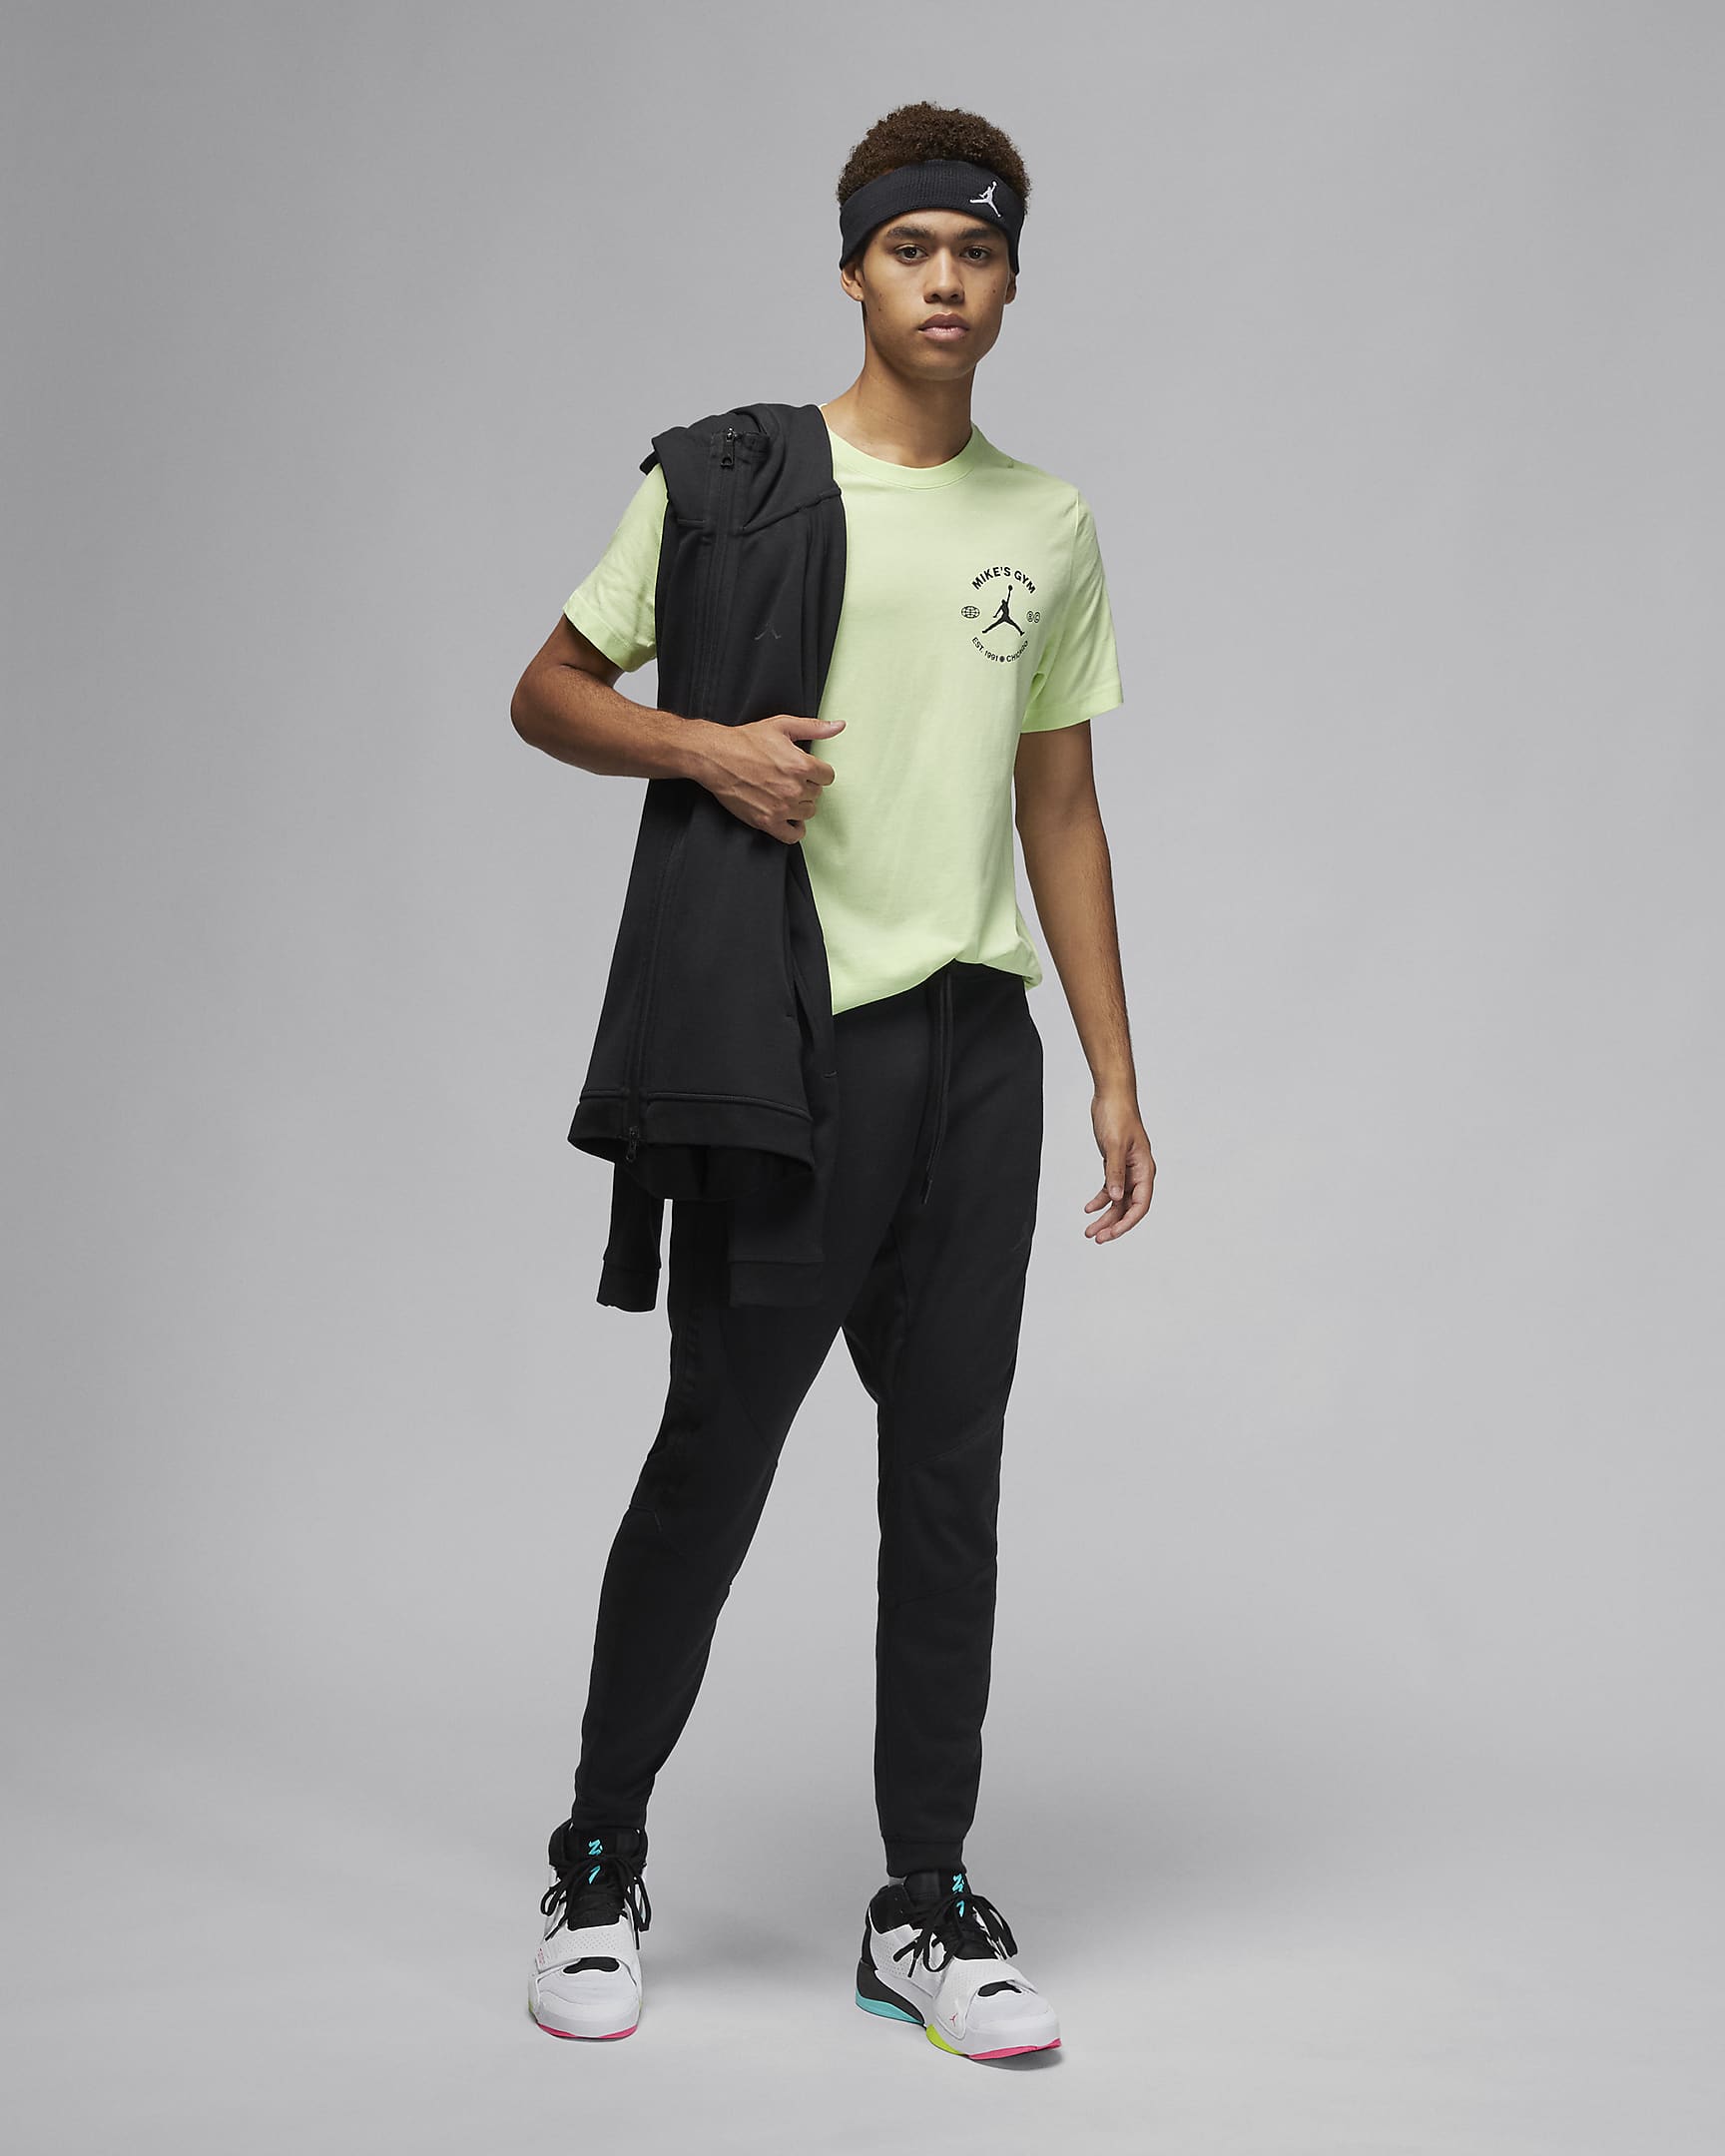 Jordan Dri-FIT Sport Men's Air Fleece Trousers - Black/Black